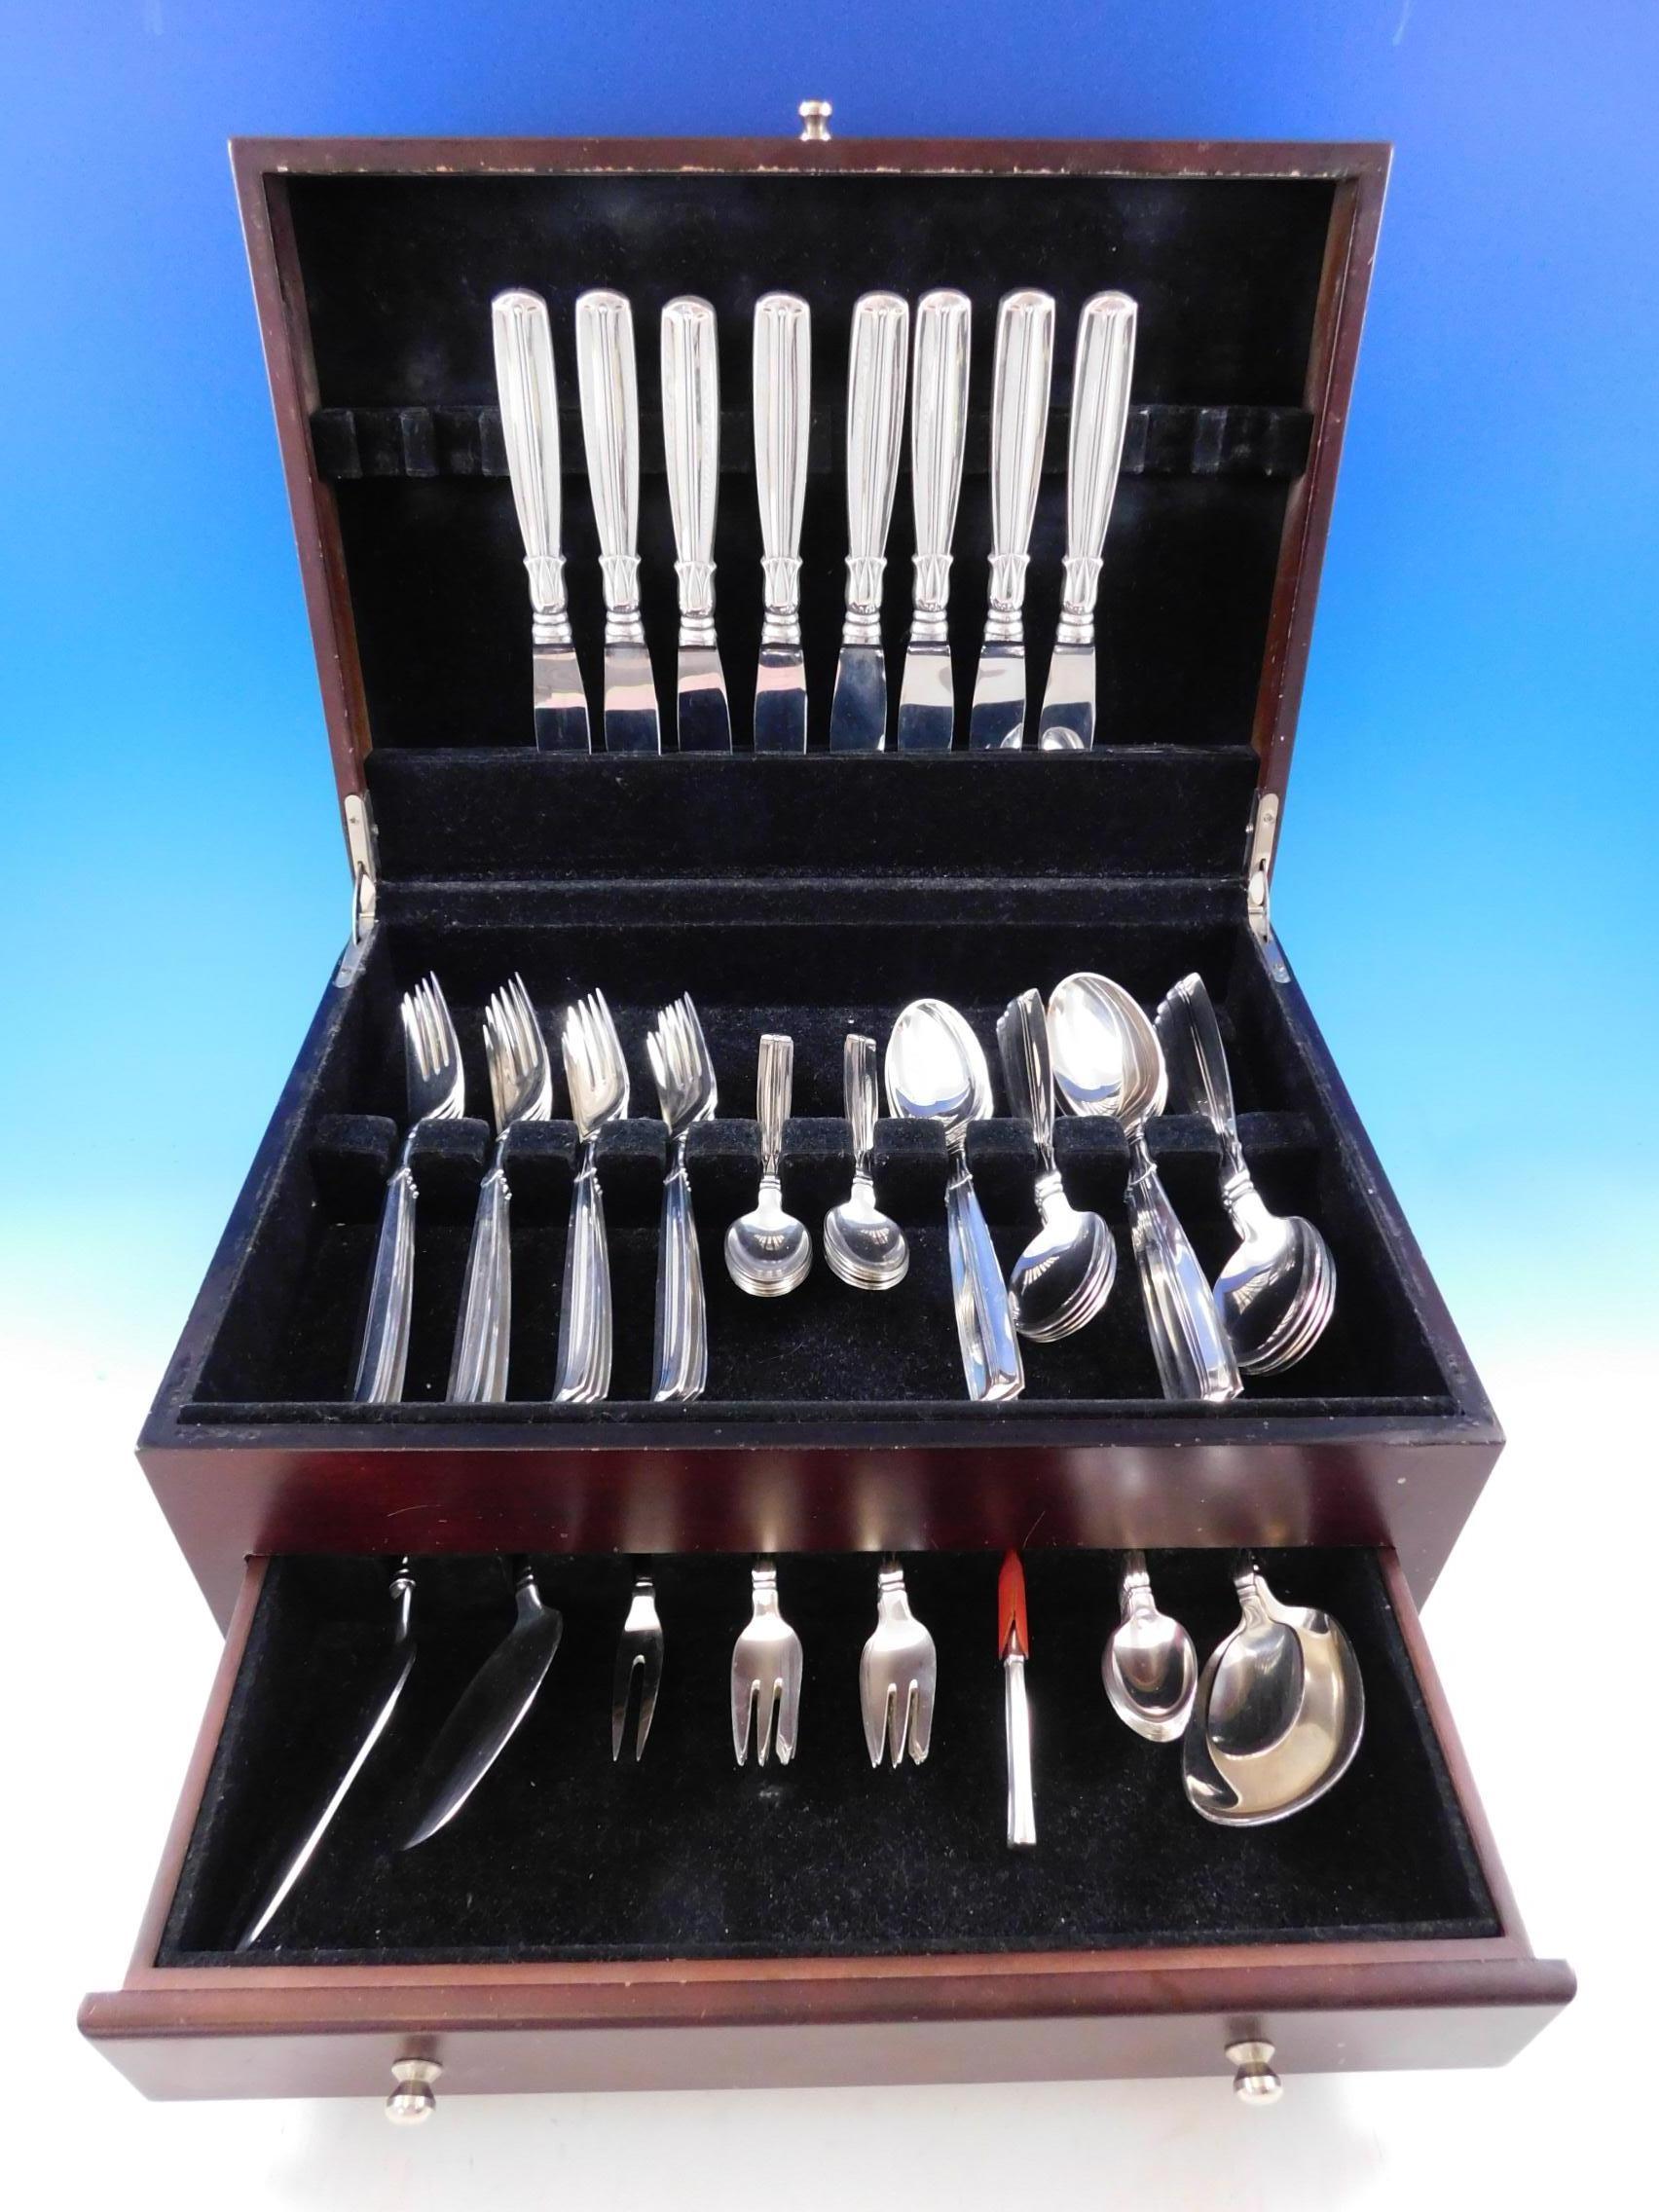 Lotus by W&S Sorensen Danish silver Scandinavian Modern flatware set, 70 pieces. This set includes:

8 dinner knives, 8 3/4